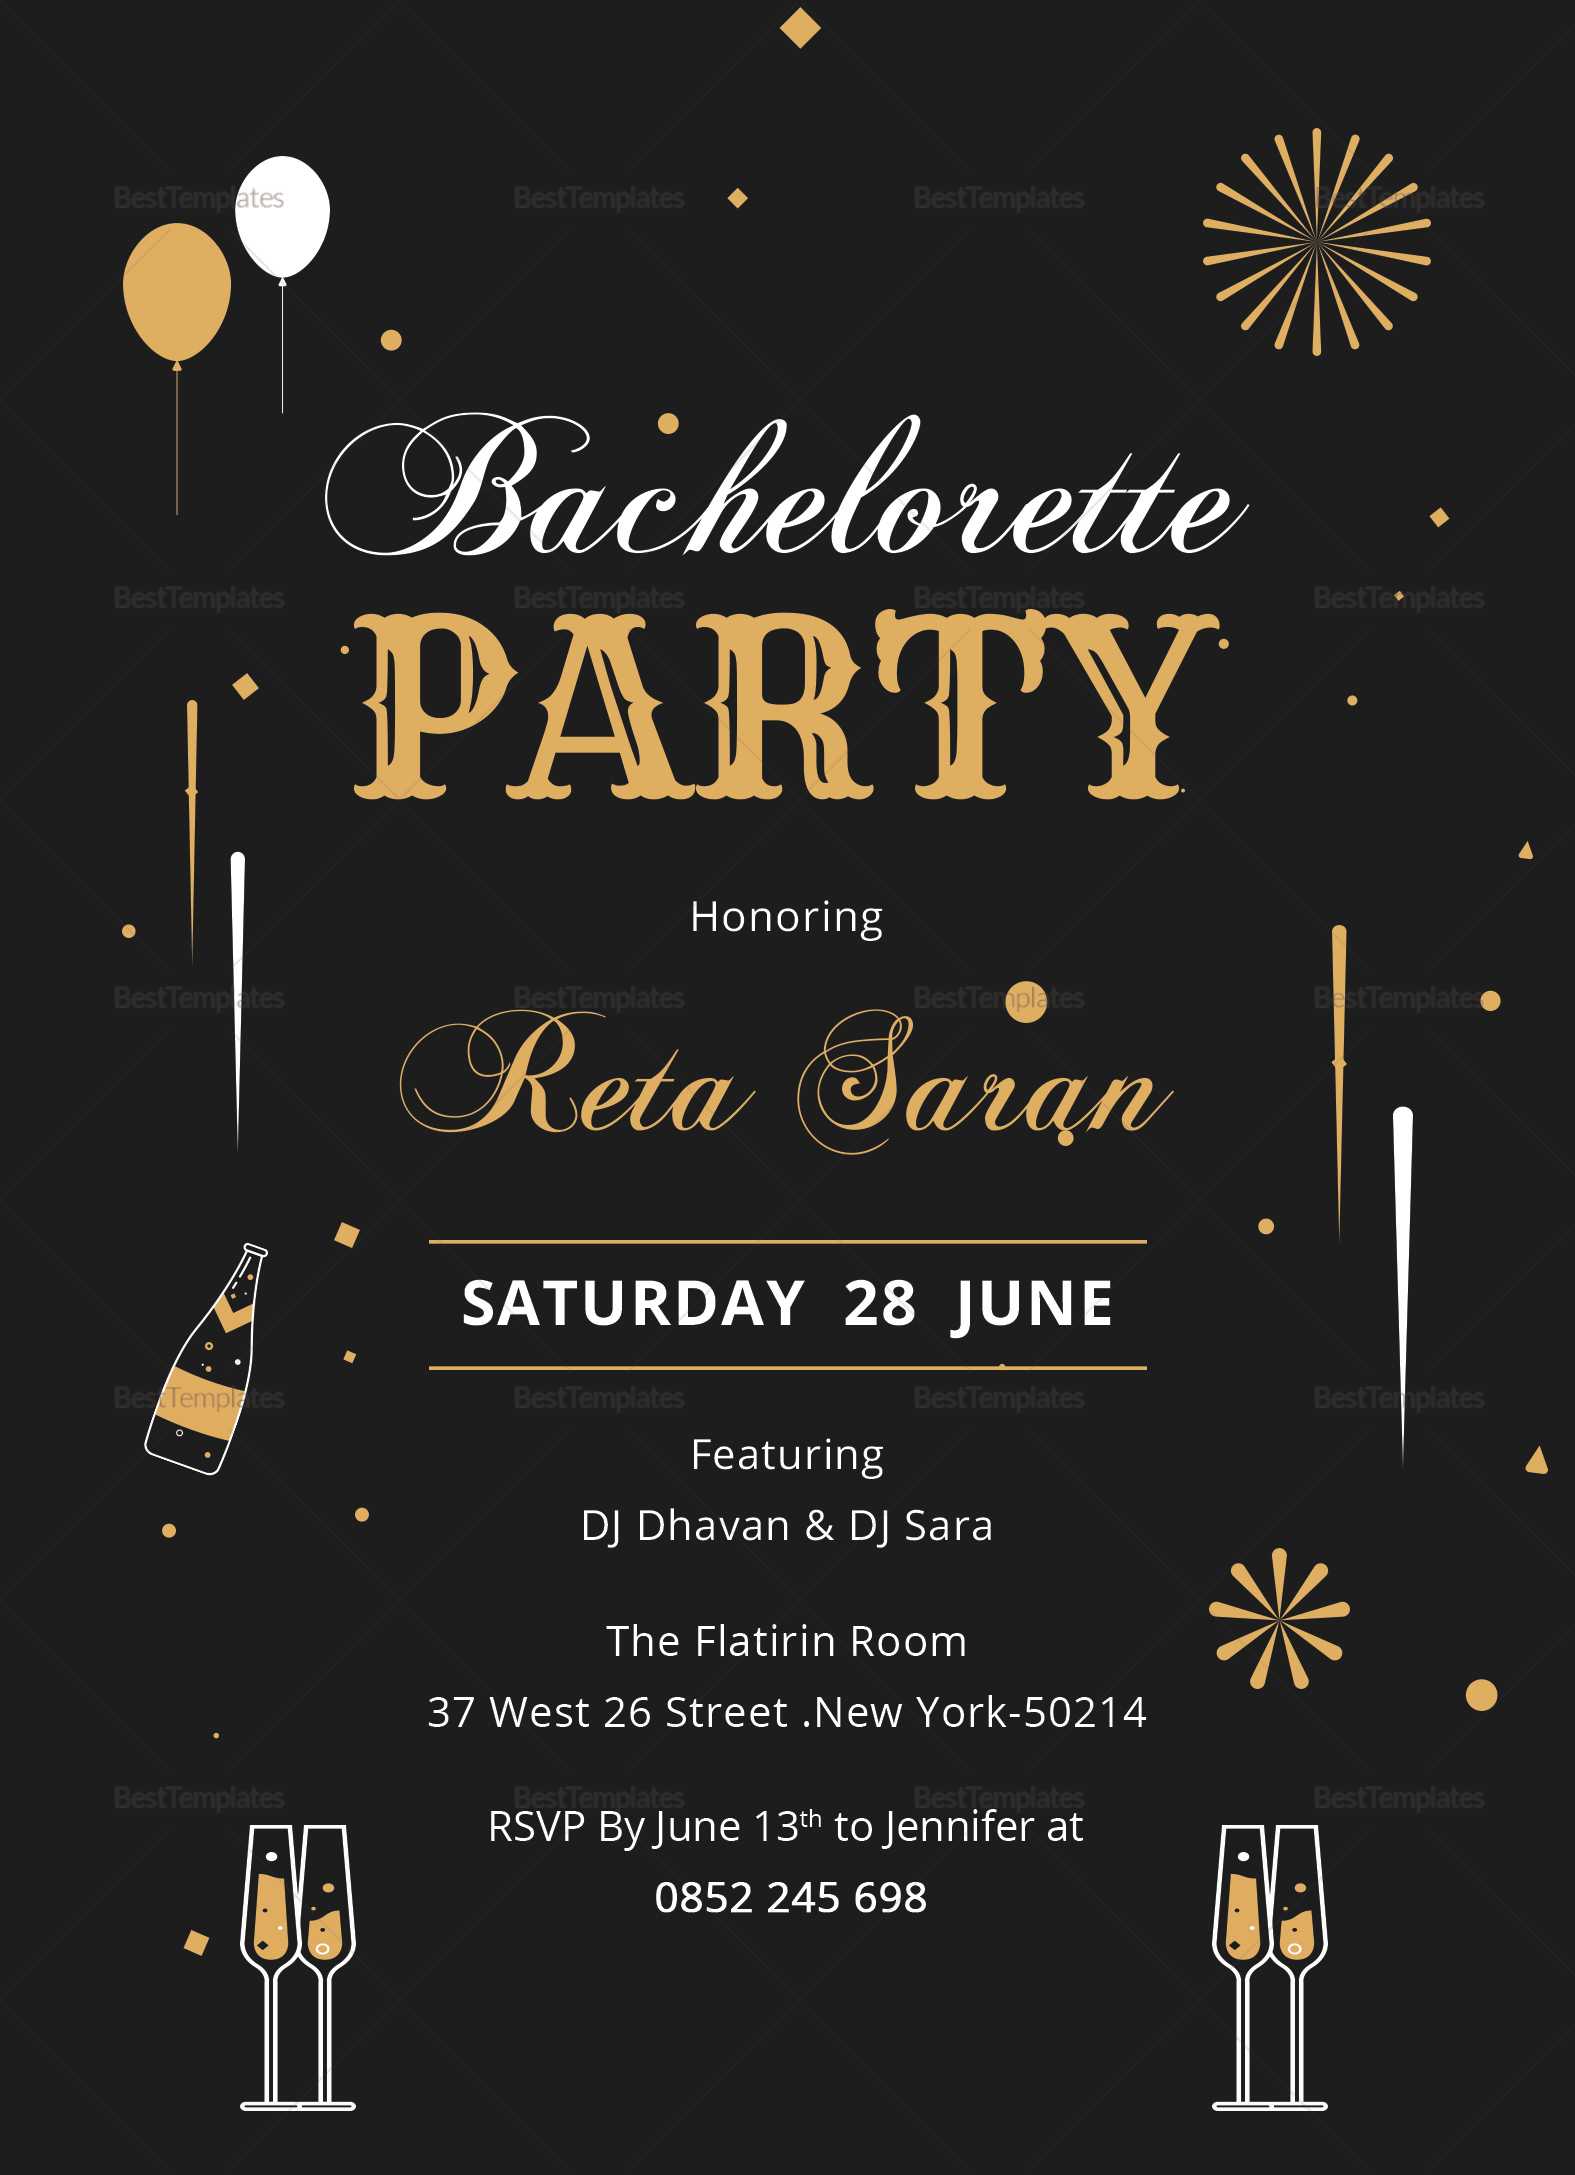 Bachelorette Party Invitation Card Template For Event Invitation Card Template